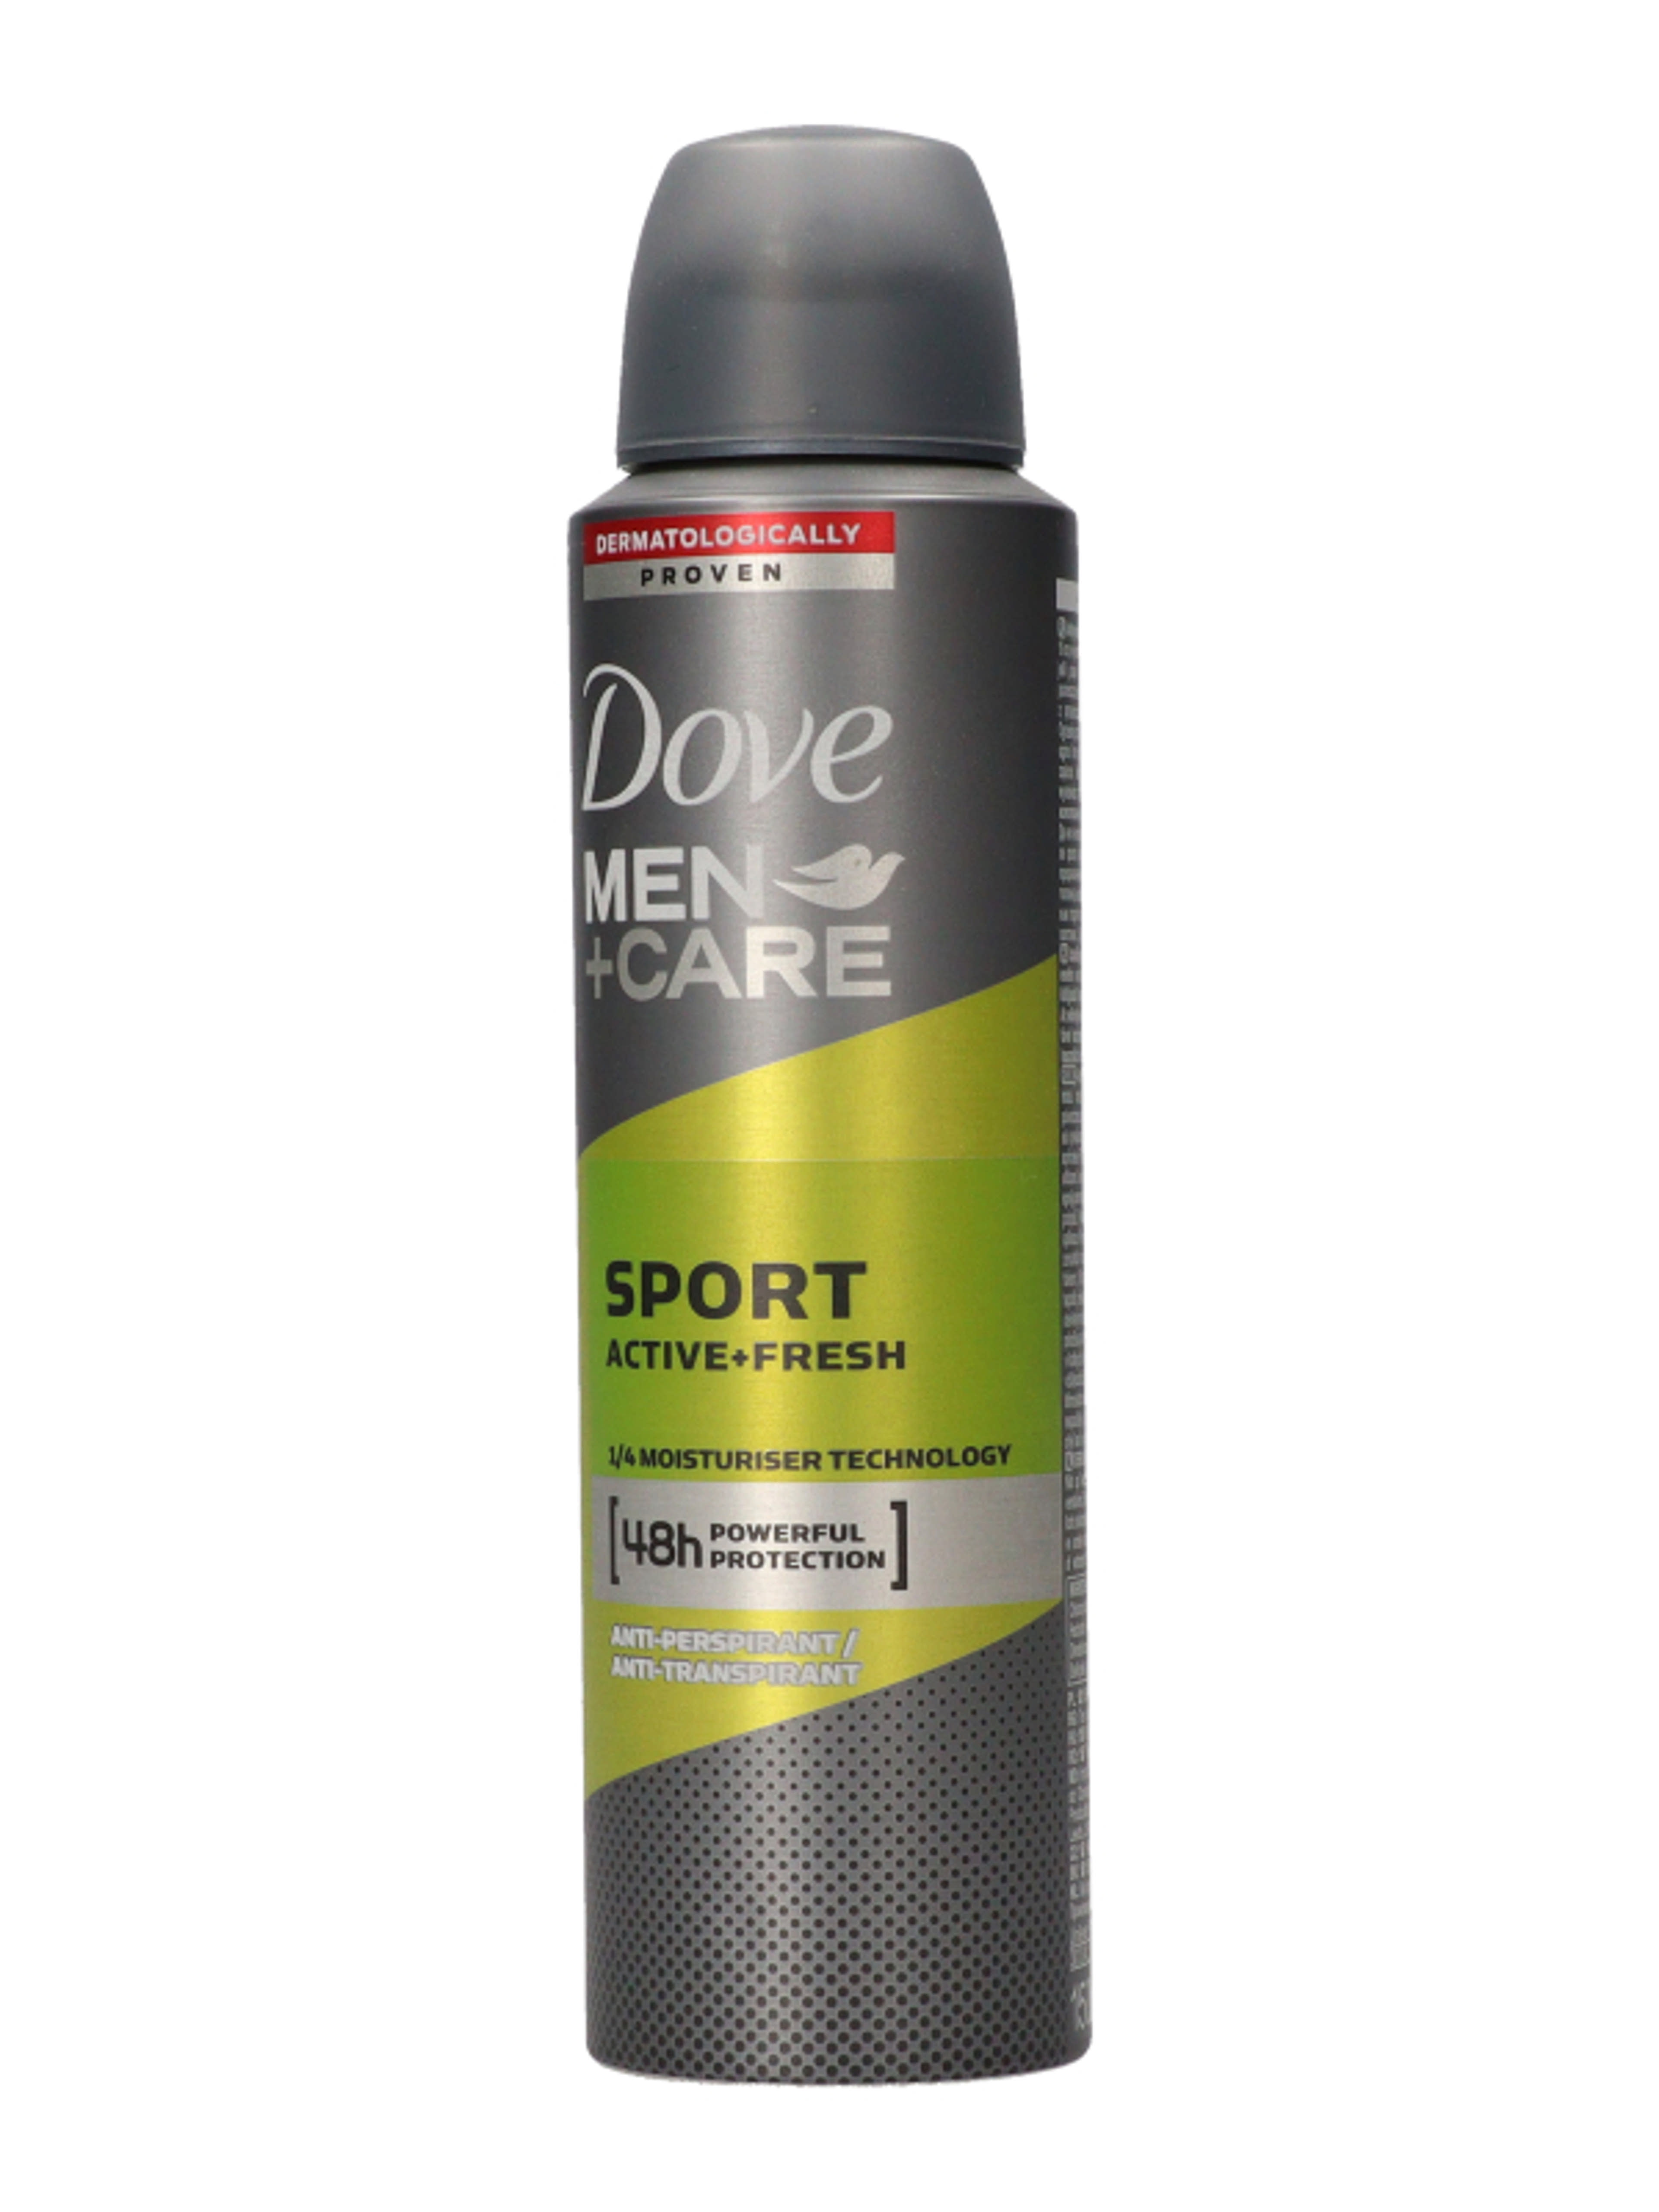 Dove deo men+care sport active fresh - 150 ml-3